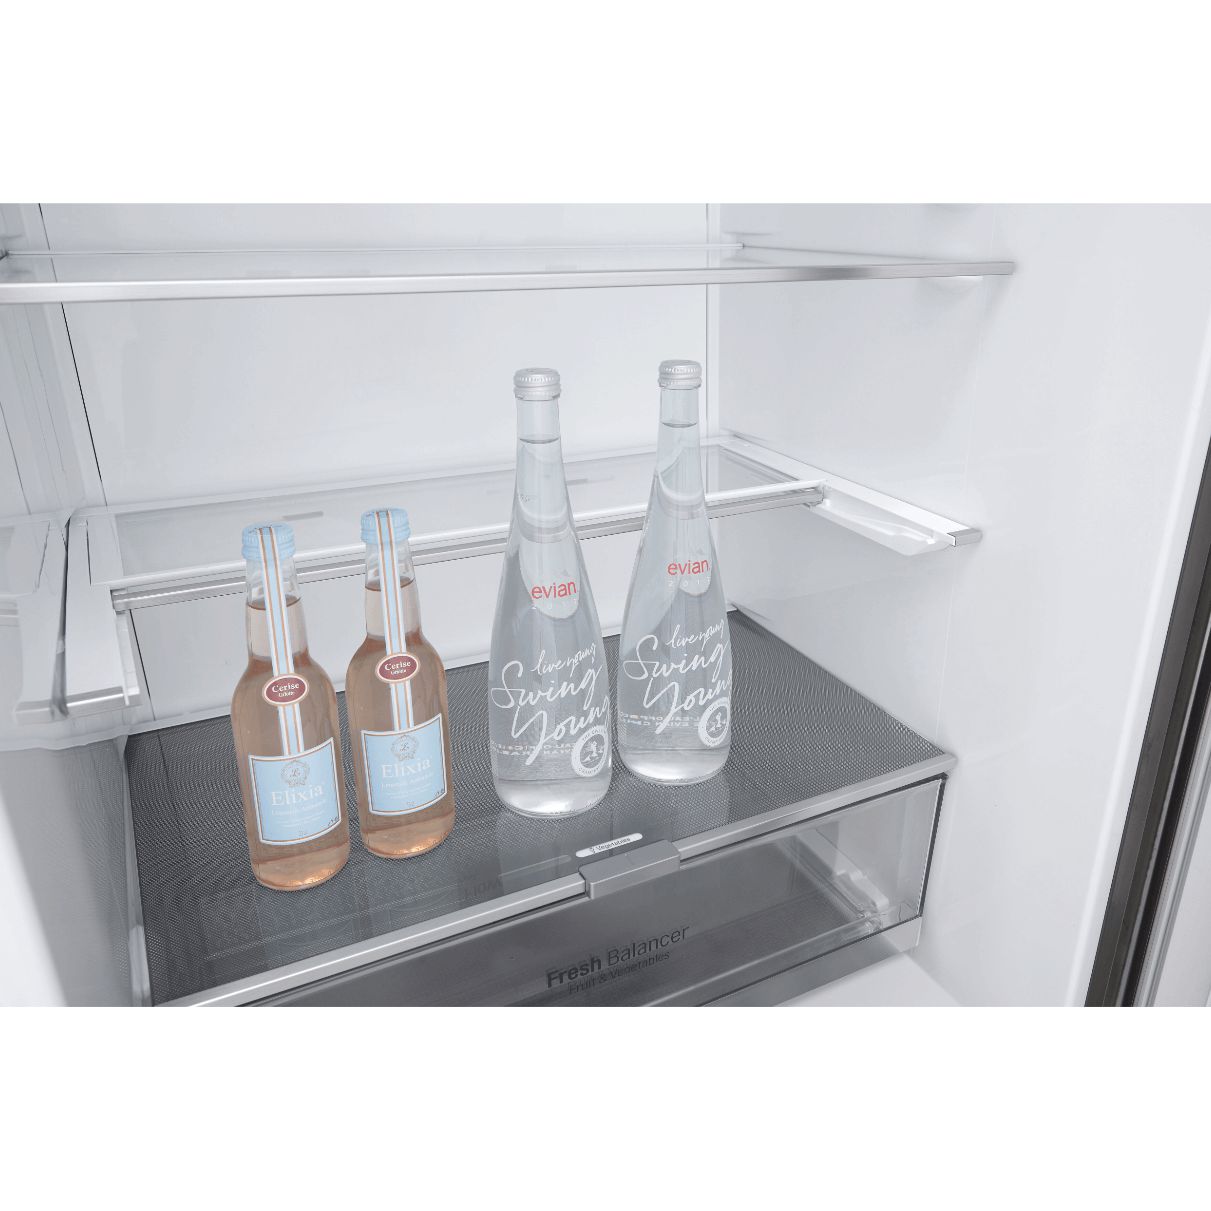 LG 28 Inch Bottom Freezer Refrigerator in Platinum Silver 14.7 Cu. Ft. (LBNC15231V)